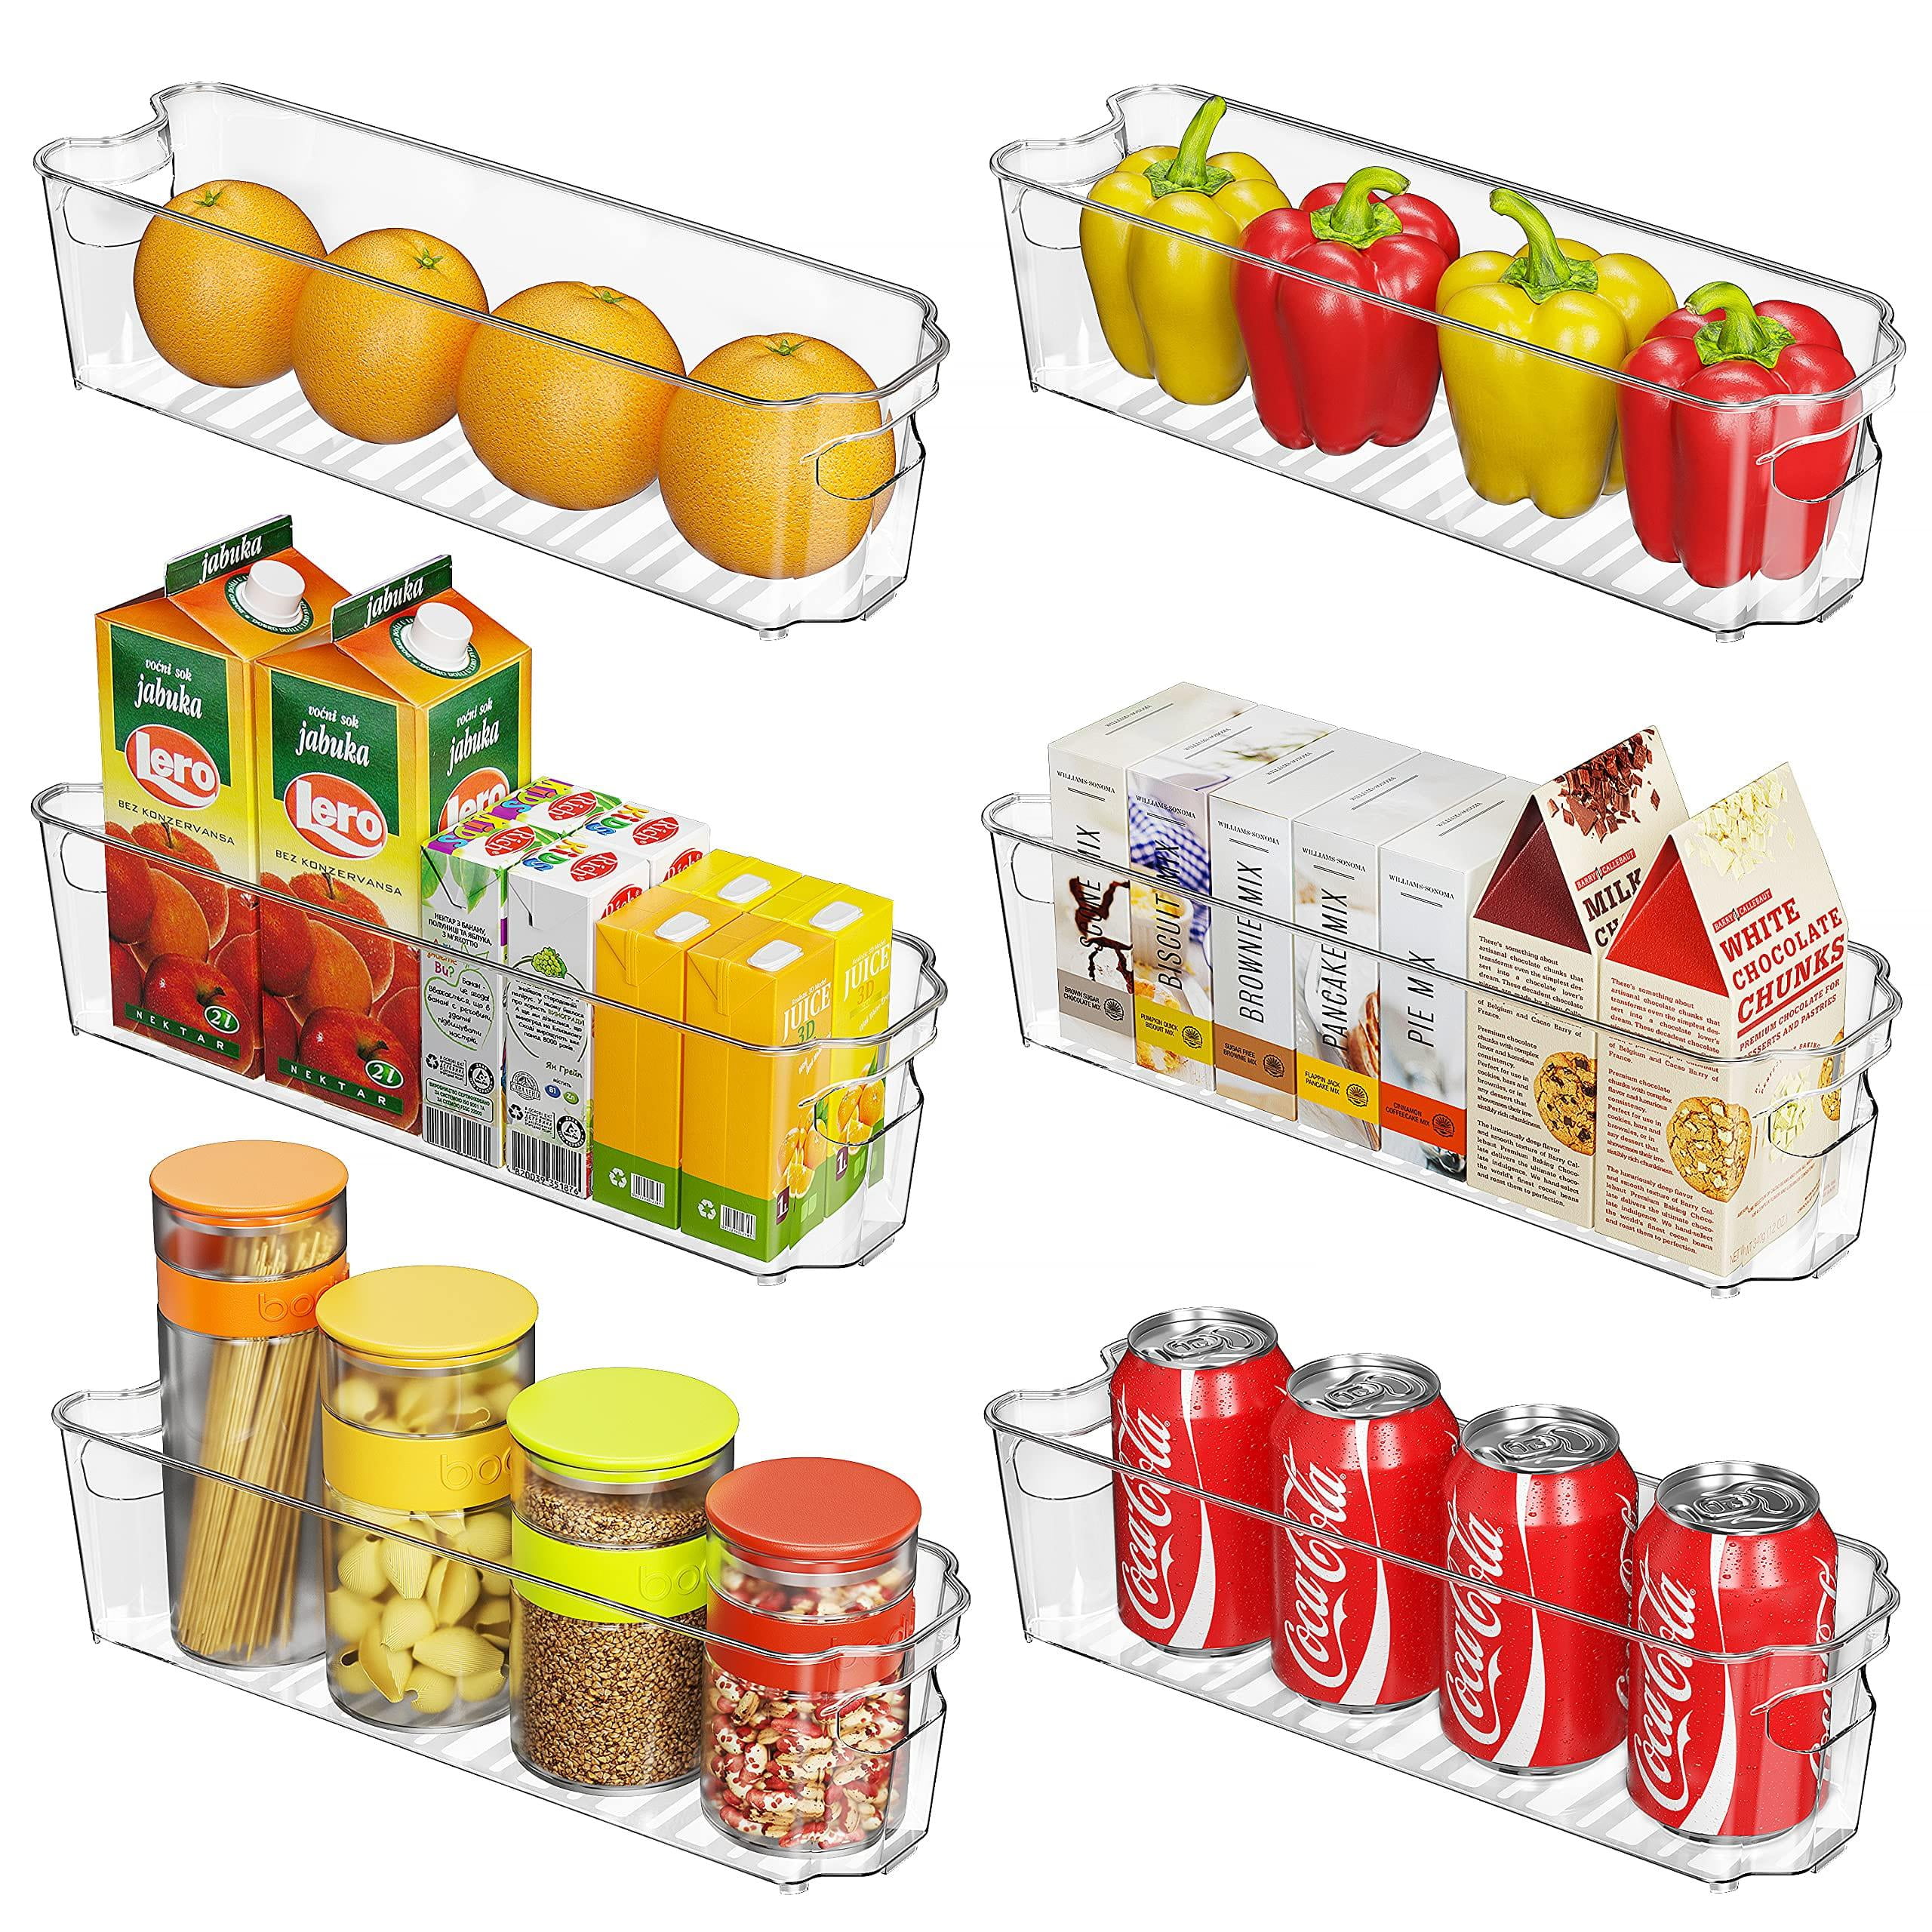 Travelwant Refrigerator Organizer Bins, Organizer Bins Stackable Fridge  Organizers with Cutout Handles for Freezer, Kitchen, Countertops, Cabinets  